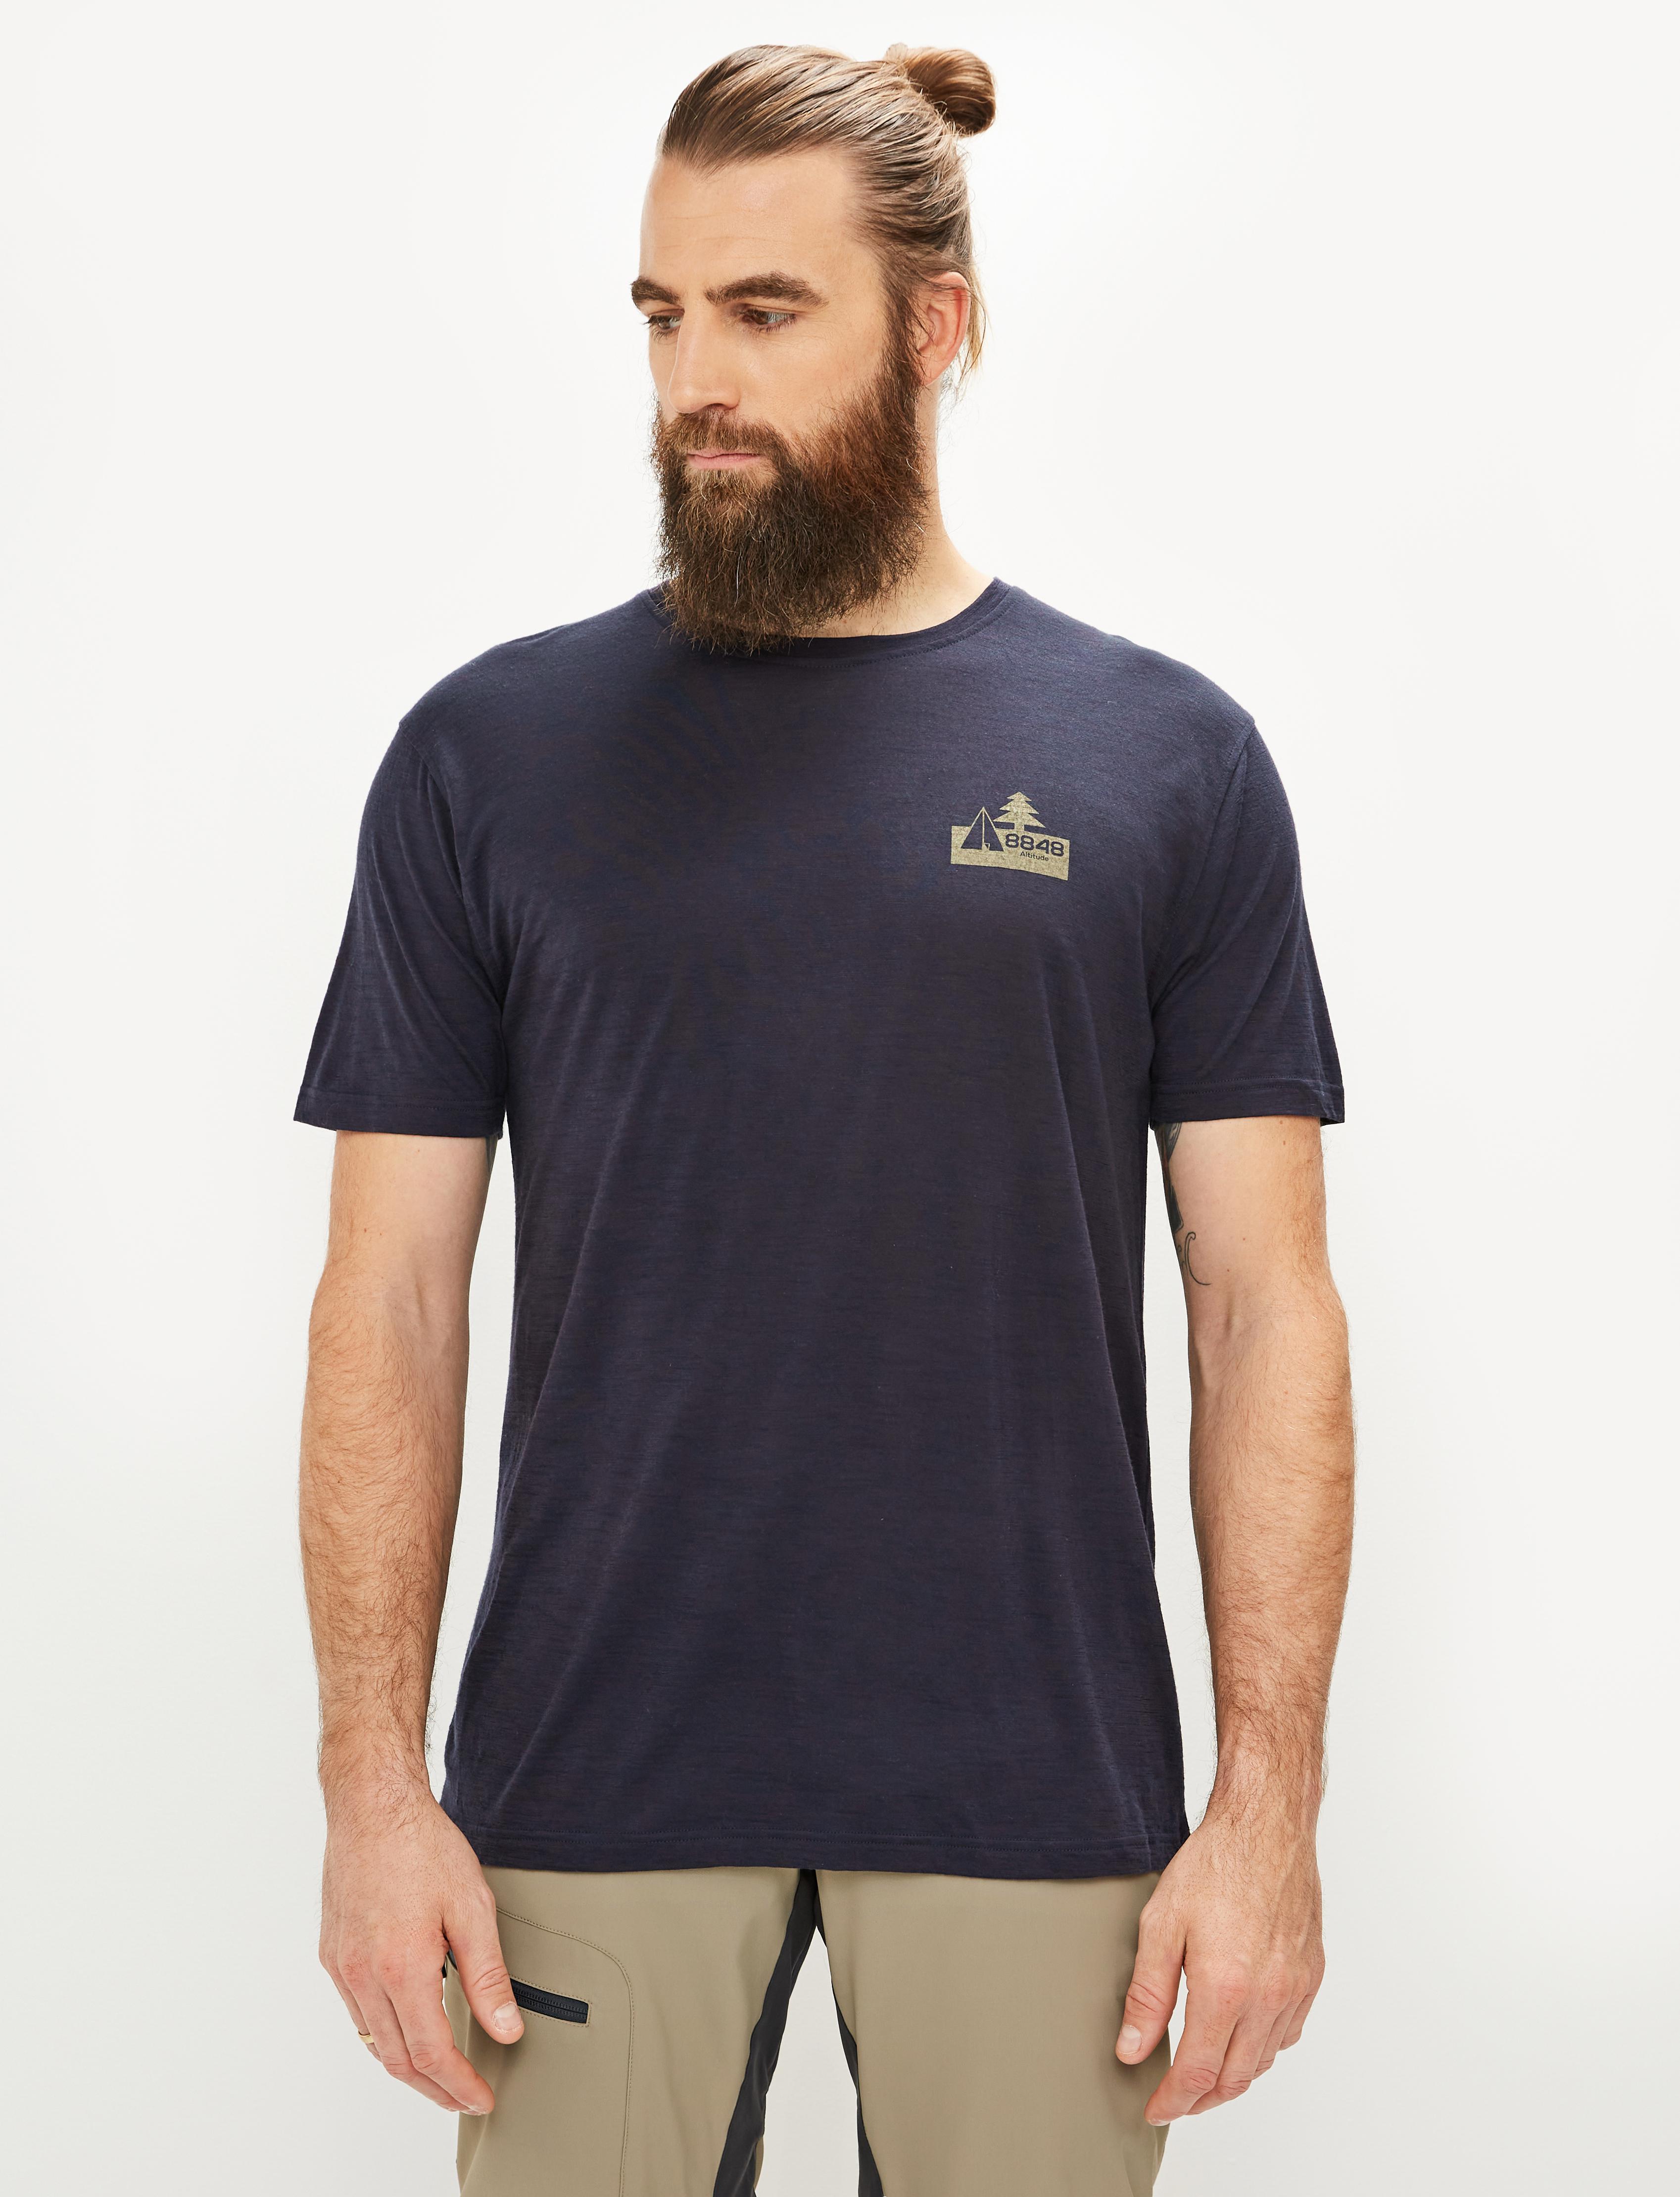 Merino Wool Tee Navy - Navy blue wool T-shirt men